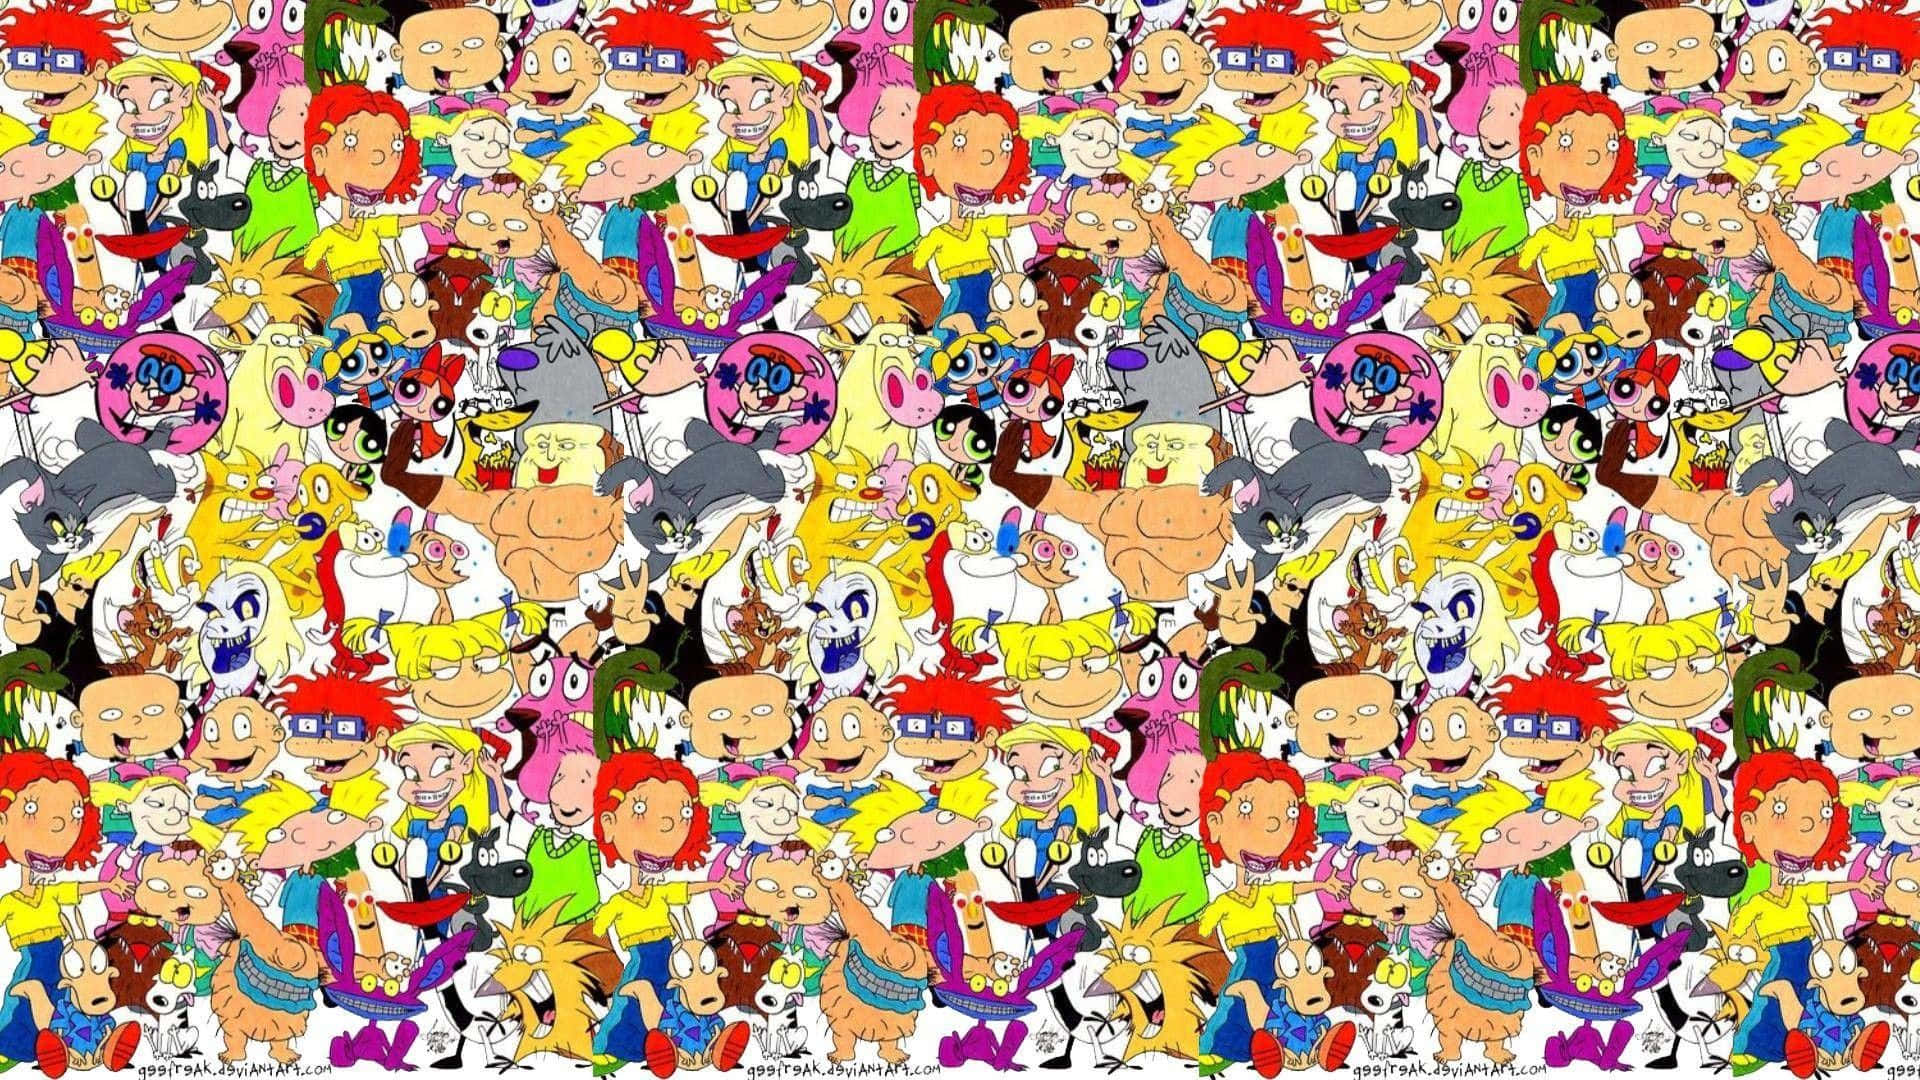 Classic Nickelodeon: Celebrating 30 Years of Fun! Wallpaper